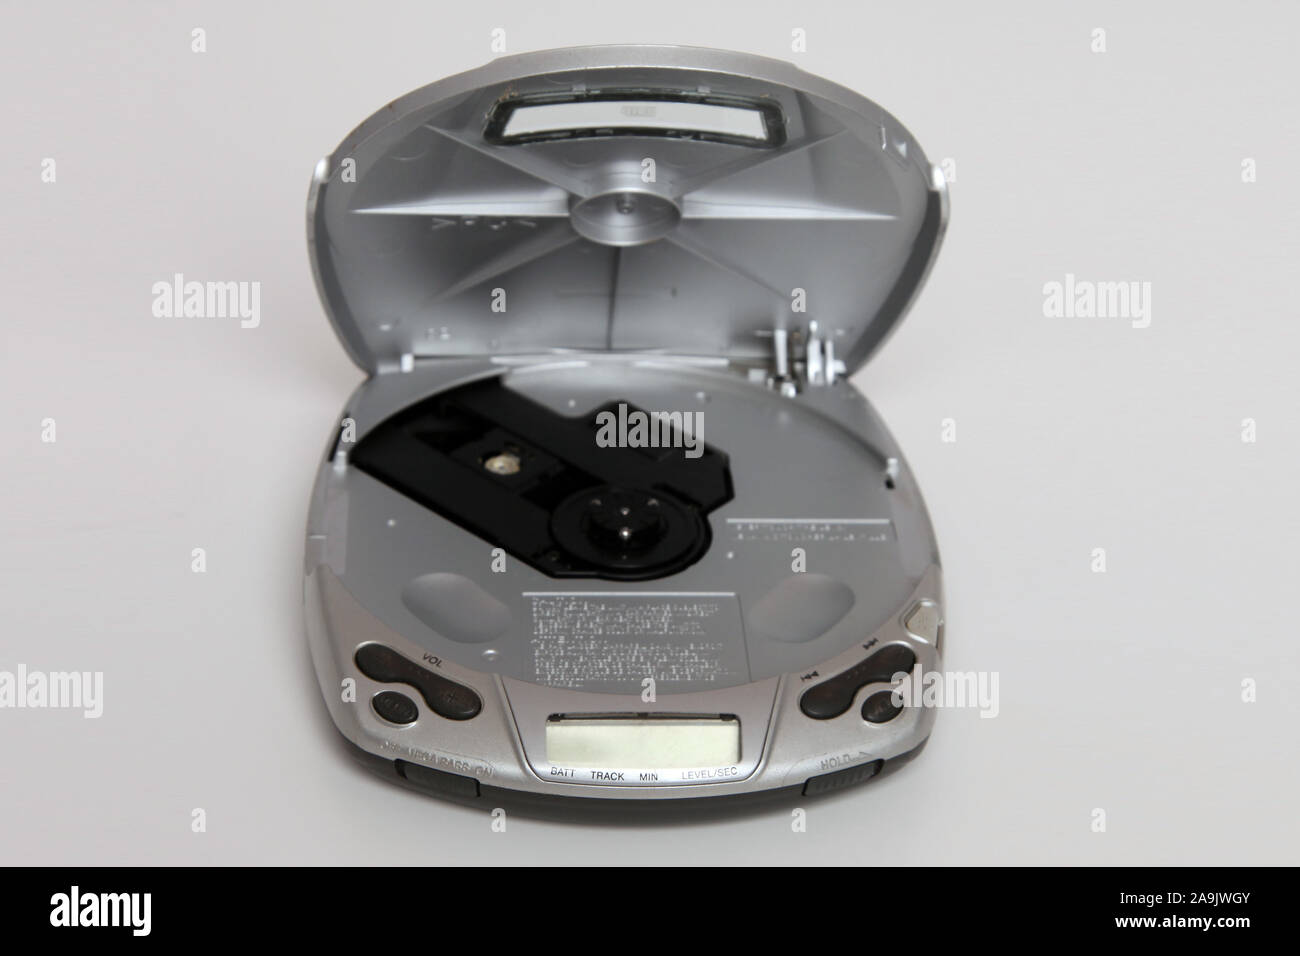 SONY D-191 CD Walkman Discman Compact Disc Player Silver Digital Mega Bass,  Lid open Stock Photo - Alamy